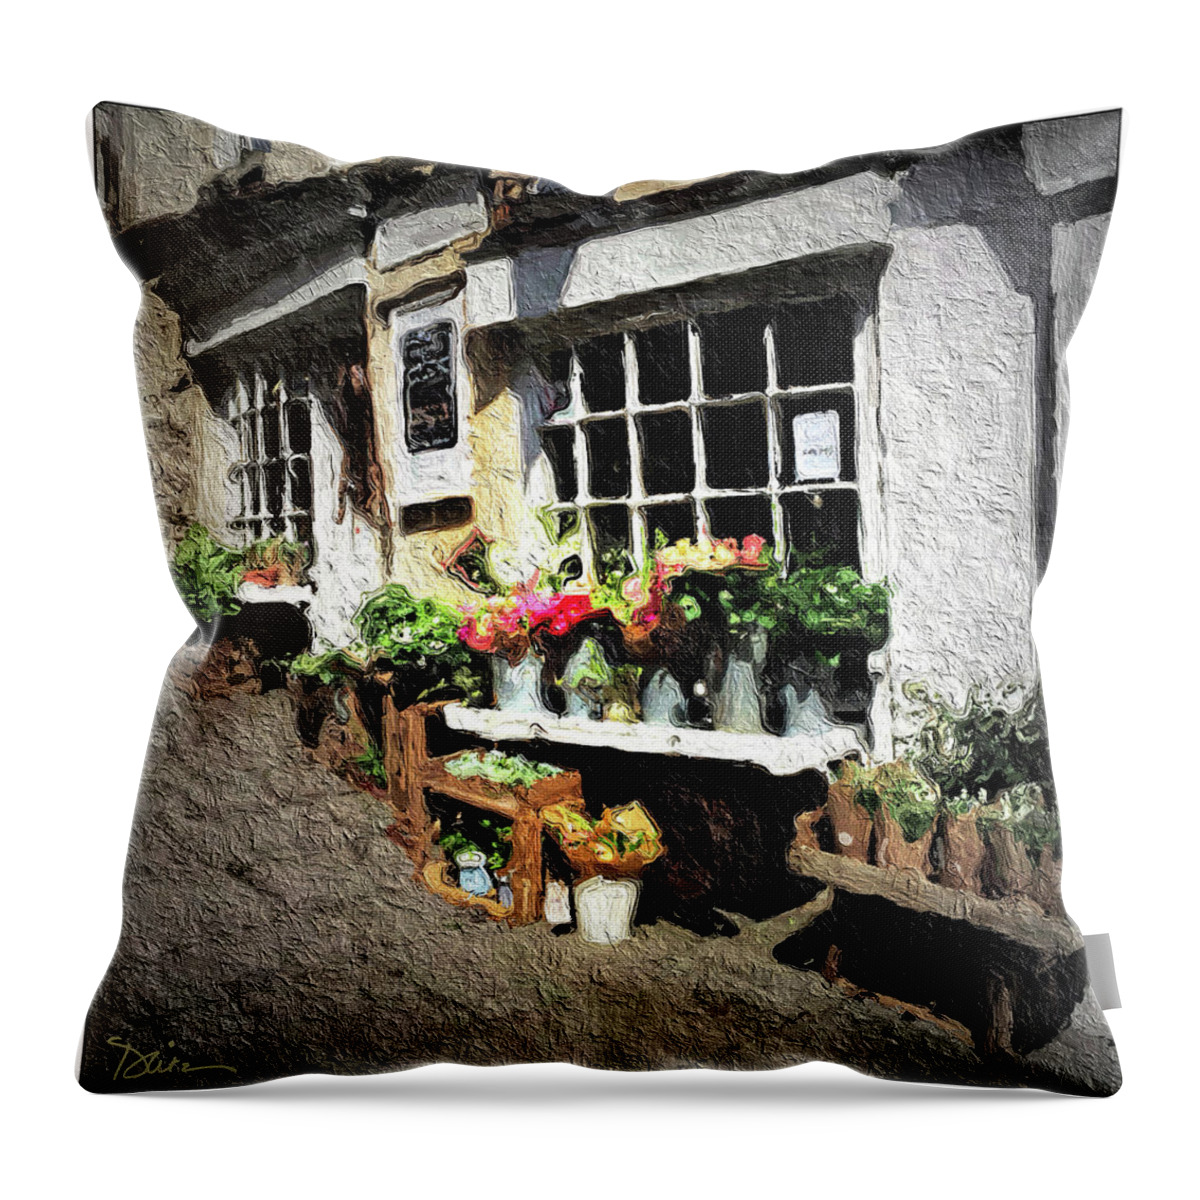 Bath Throw Pillow featuring the photograph Flower Shop In Bath England by Peggy Dietz